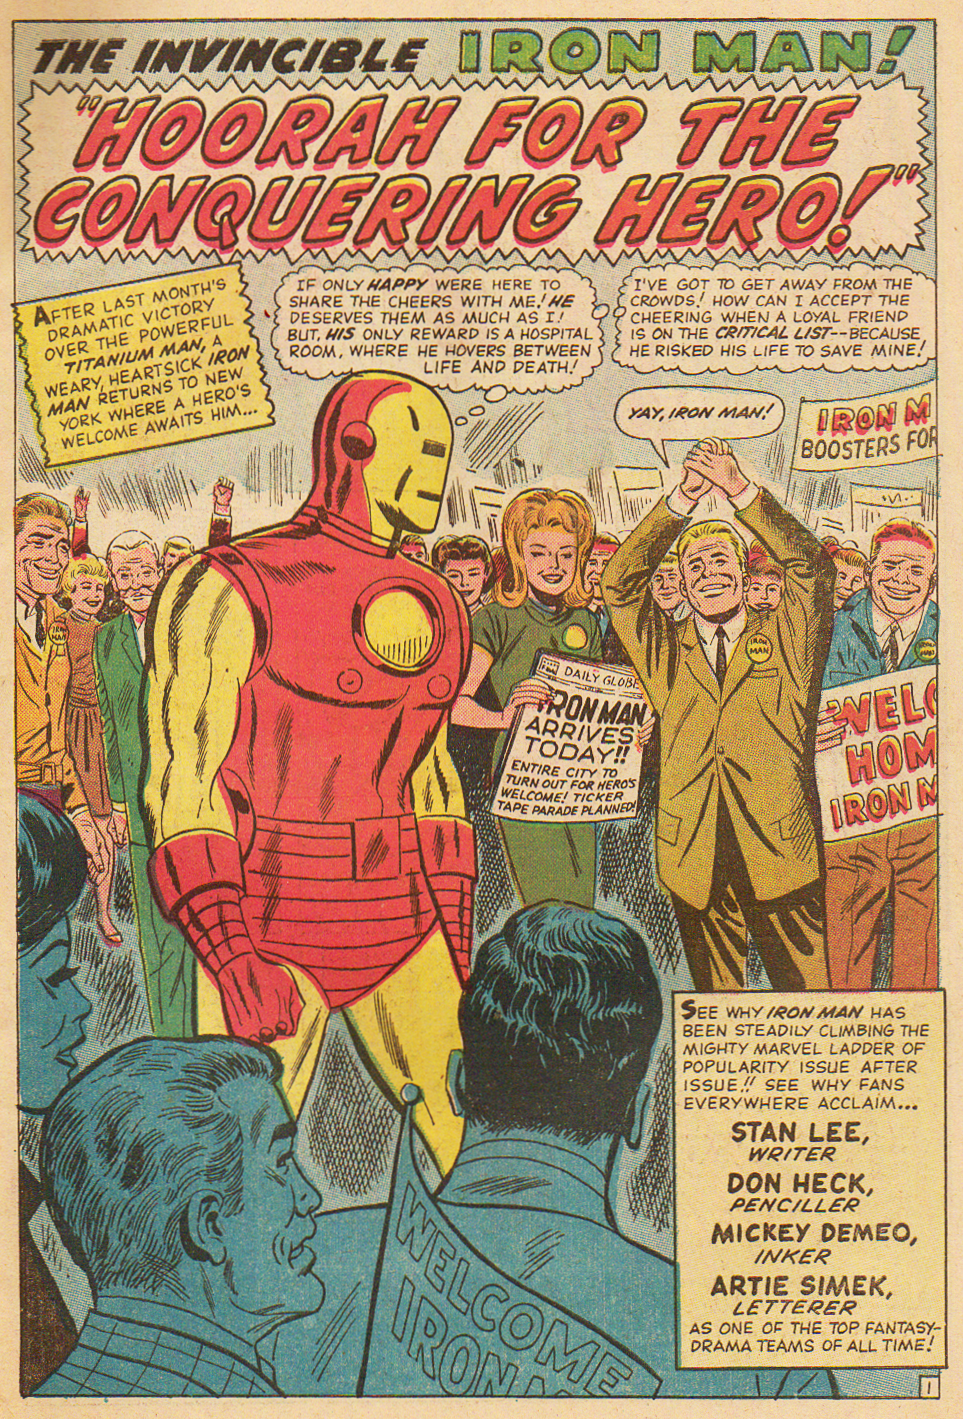 The Visual Exegesis: Iron Man & Captain America, No. 72